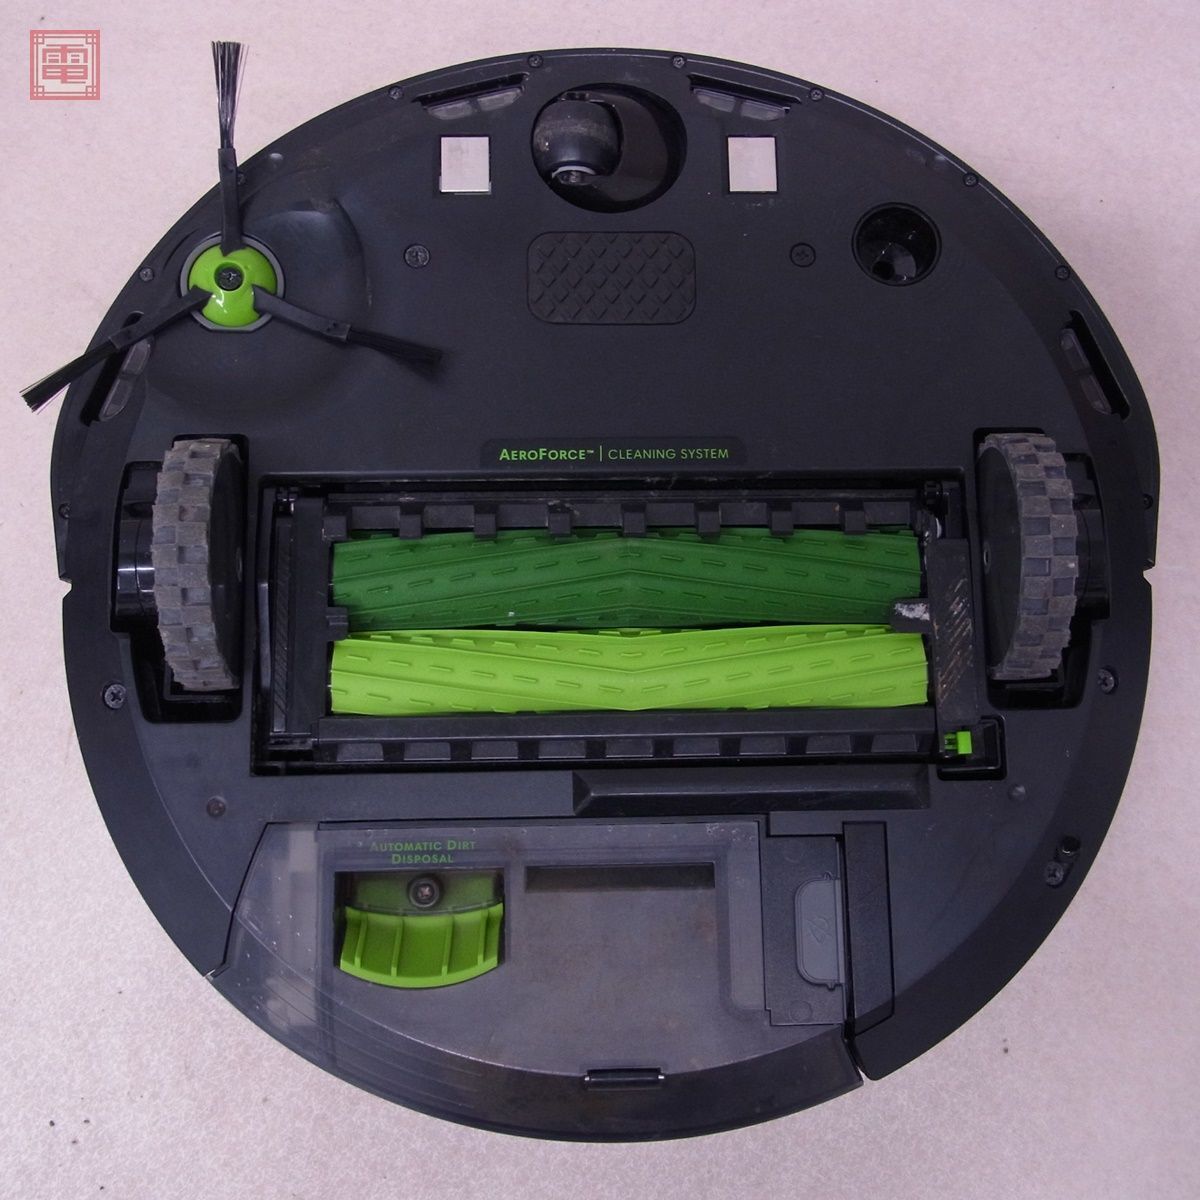 *iRobot robot vacuum cleaner Roomba i3 + Home base attaching I robot roomba Junk [40